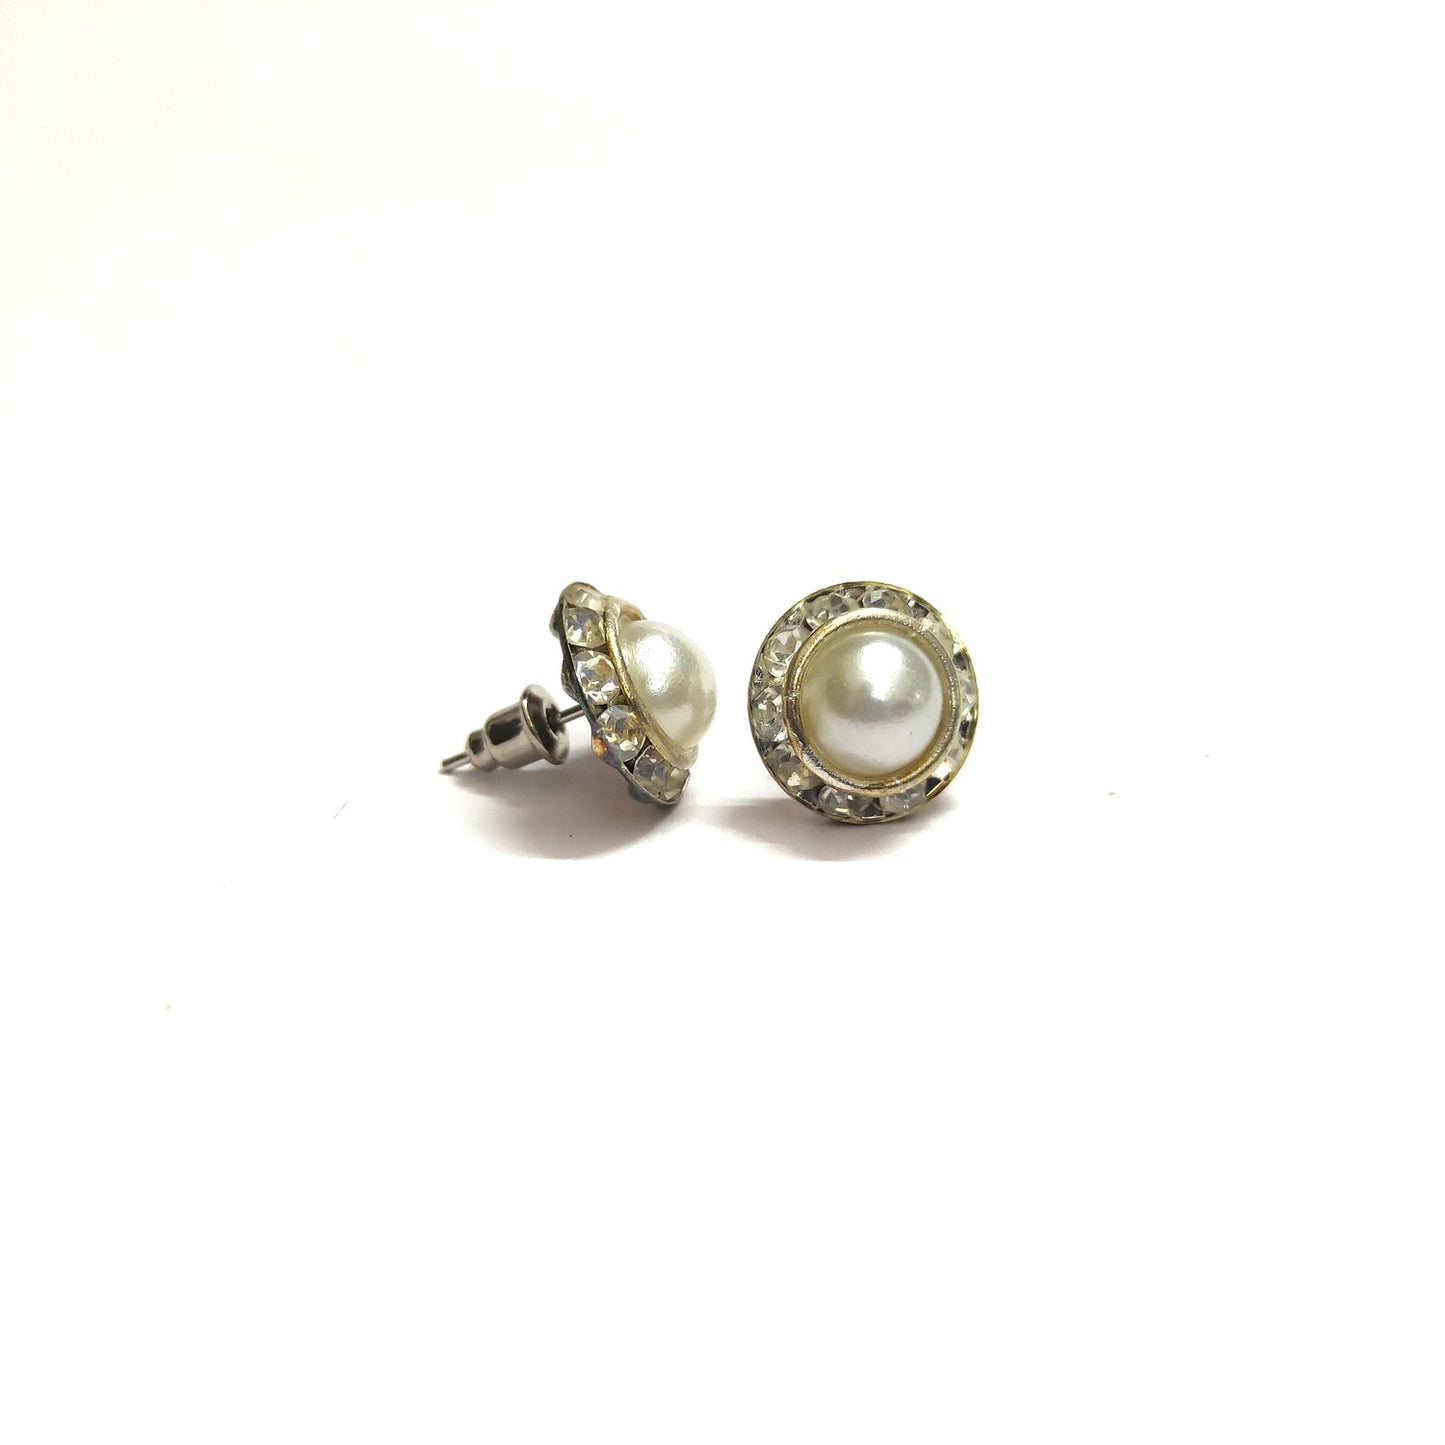 Anokhi Ada Fancy Small Round Stud Earrings for Girls ( White, AS-06R )